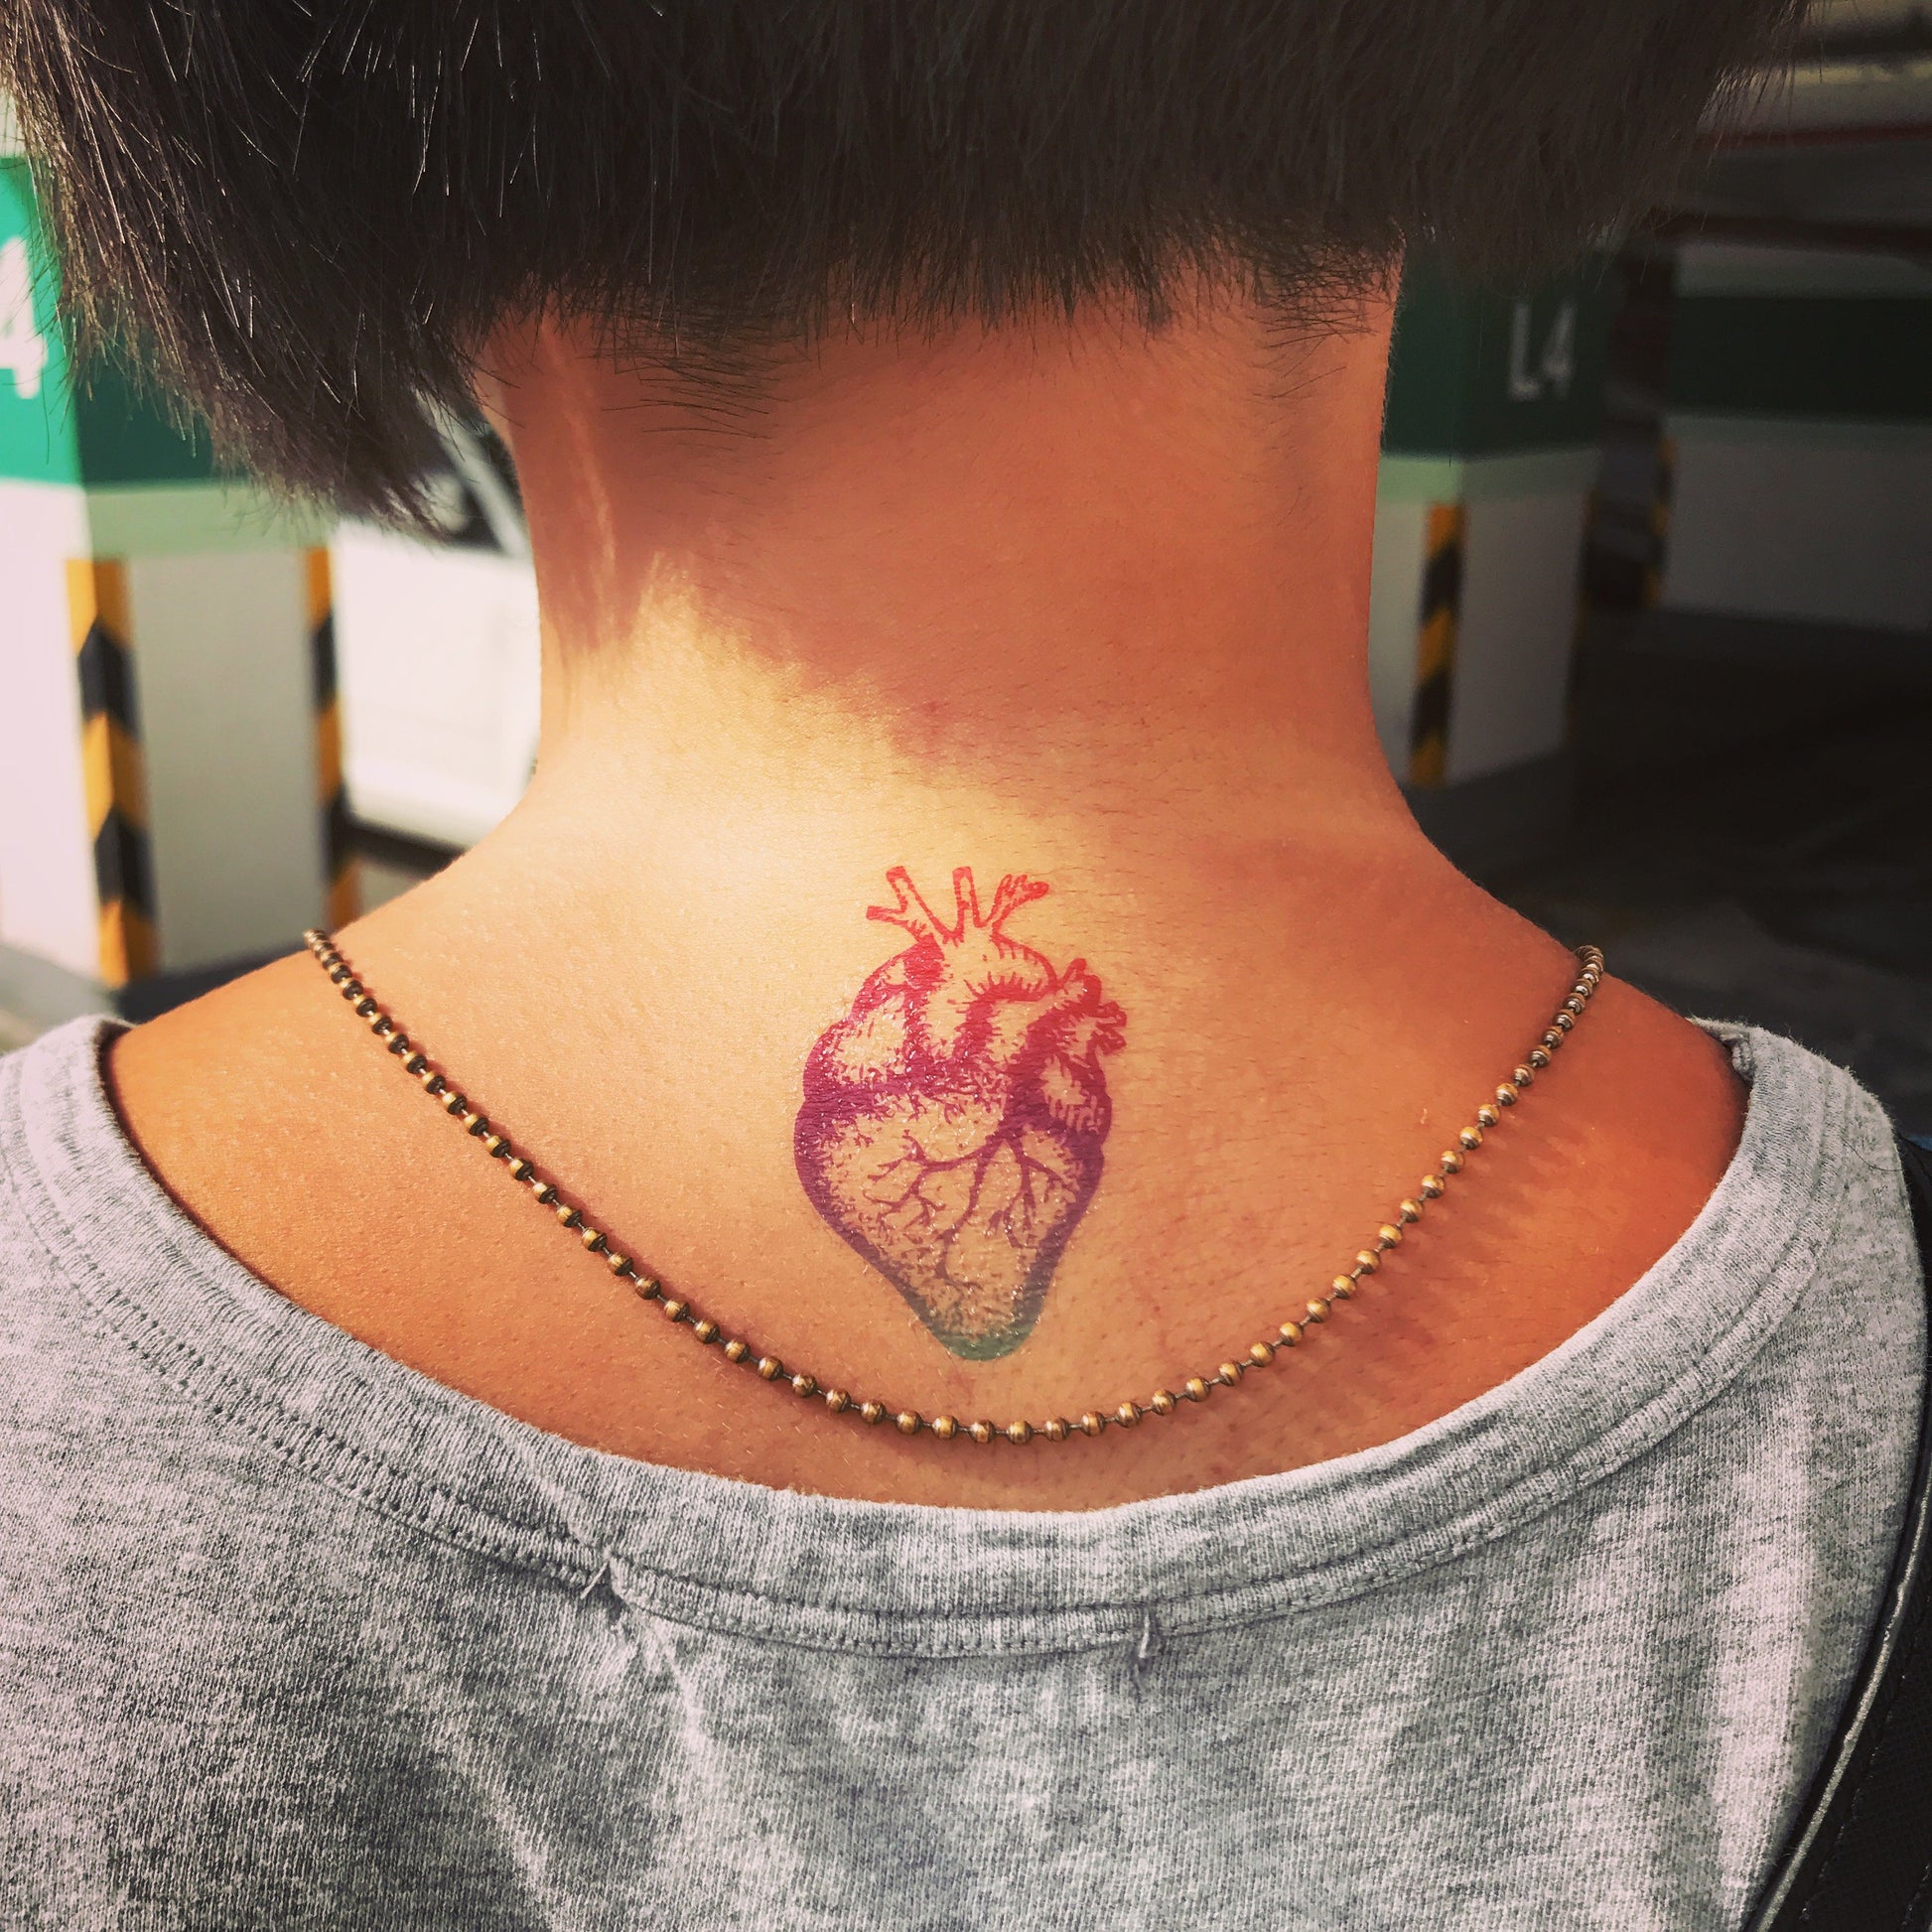 fake small rainbow baby anatomical heart color temporary tattoo sticker design idea on neck